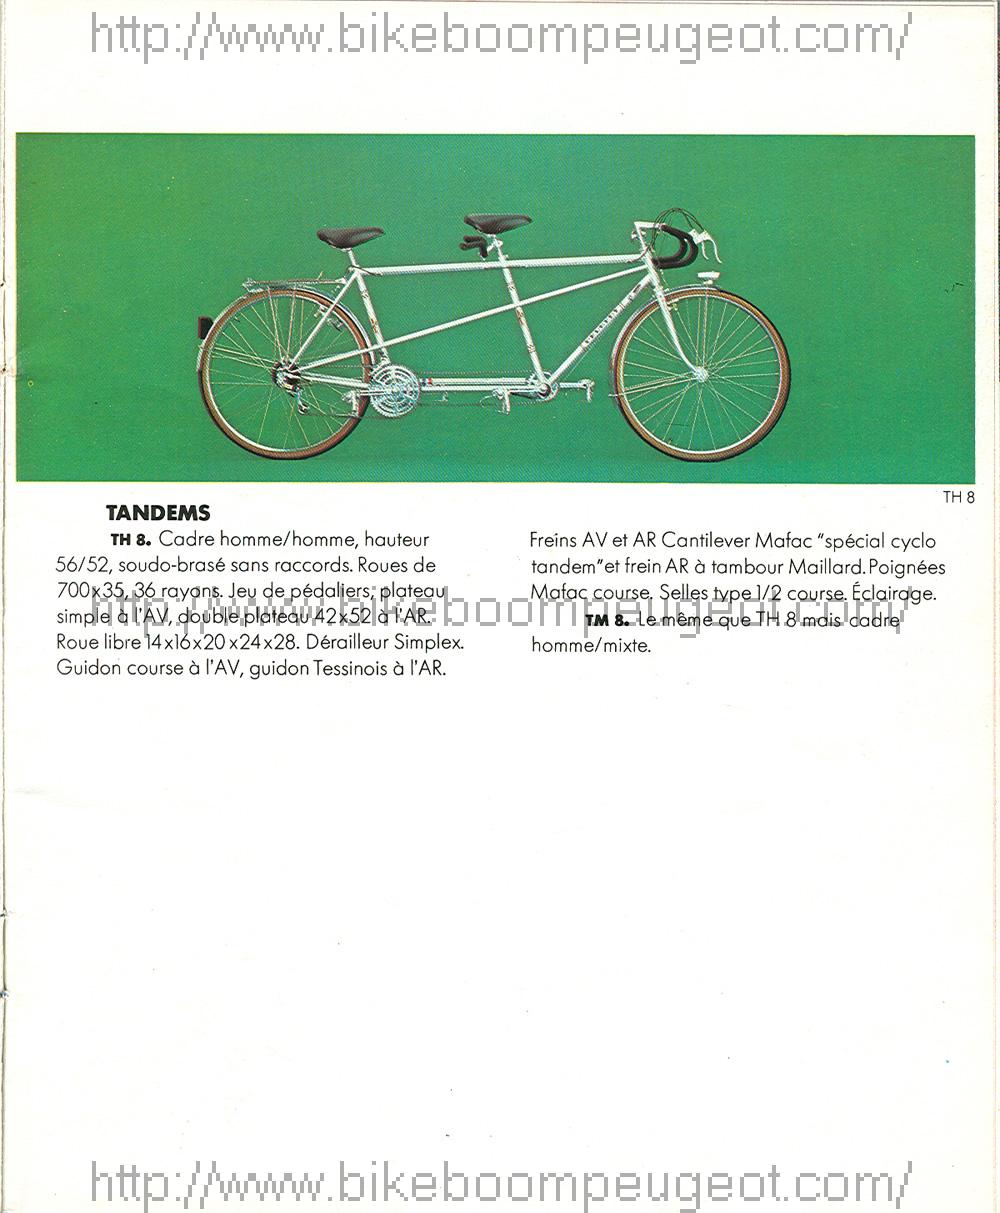 Peugeot_1978_French_Catalog_Tandems_BikeBoomPeugeot.JPG